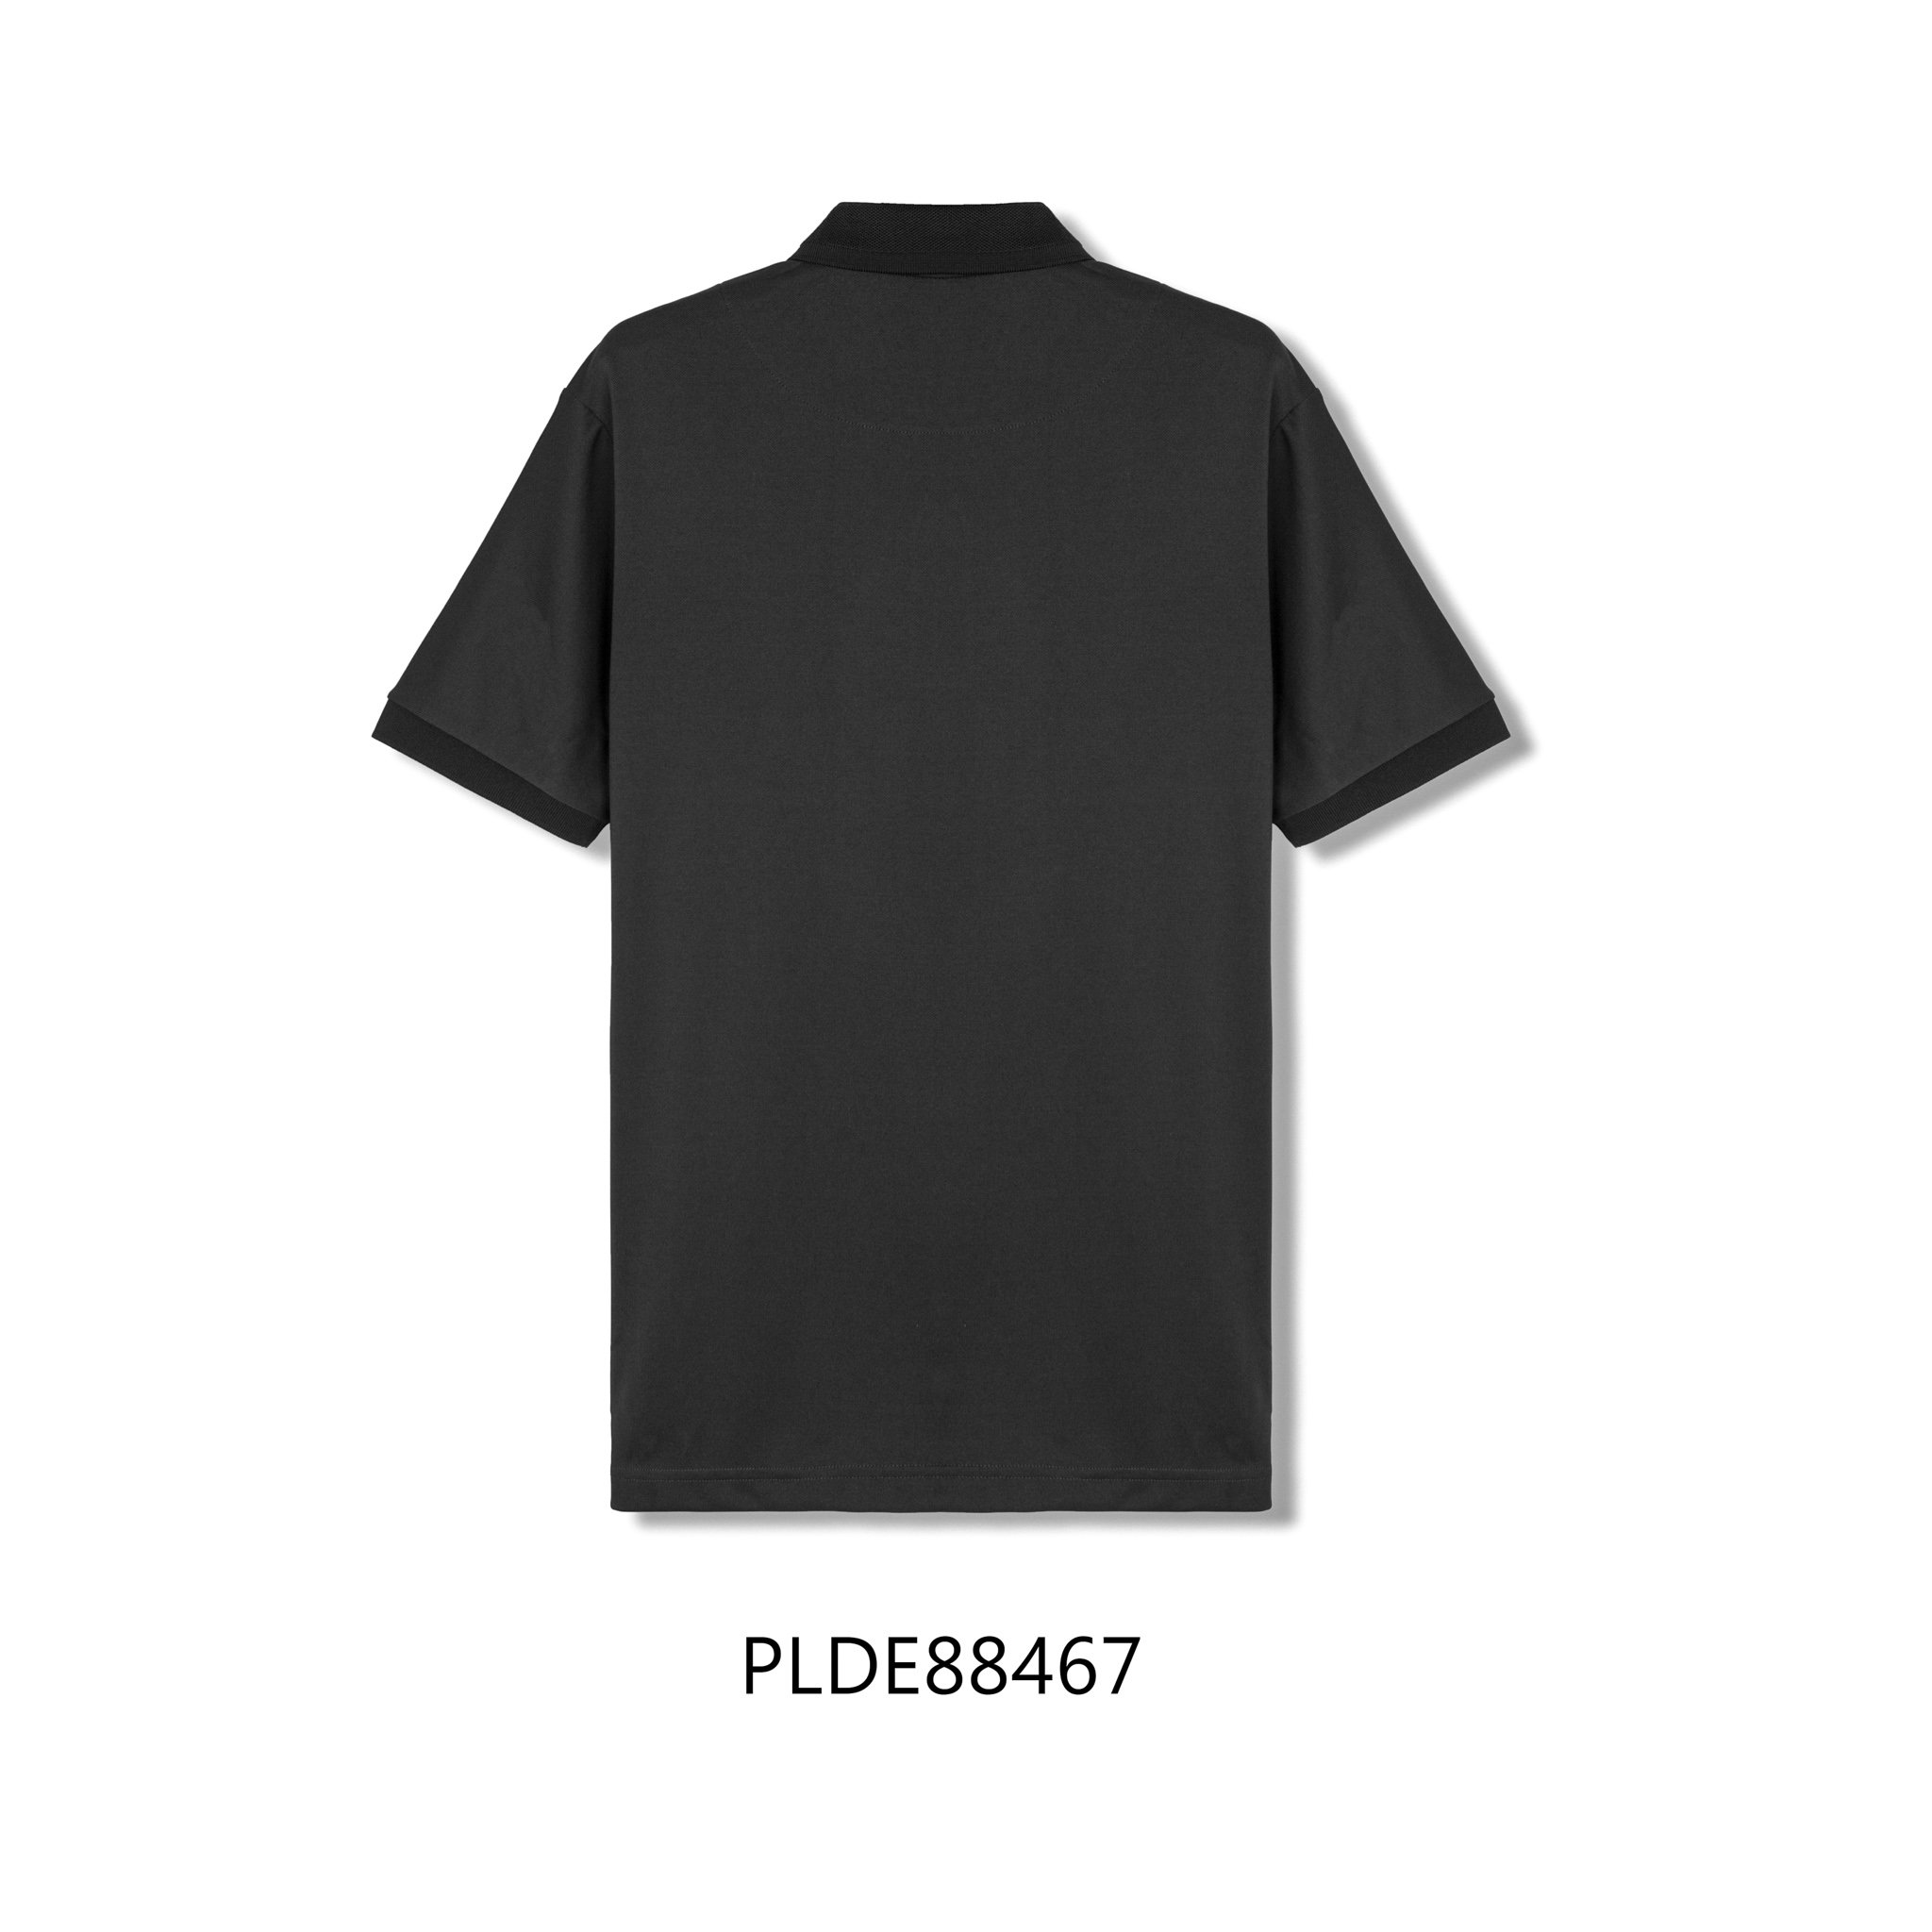 Áo polo vải cafe Old Sailor - O.S.L POLO - PREMIUM SERIES - BLACK - đen - PLDE88467 - Big Size upto 5XL